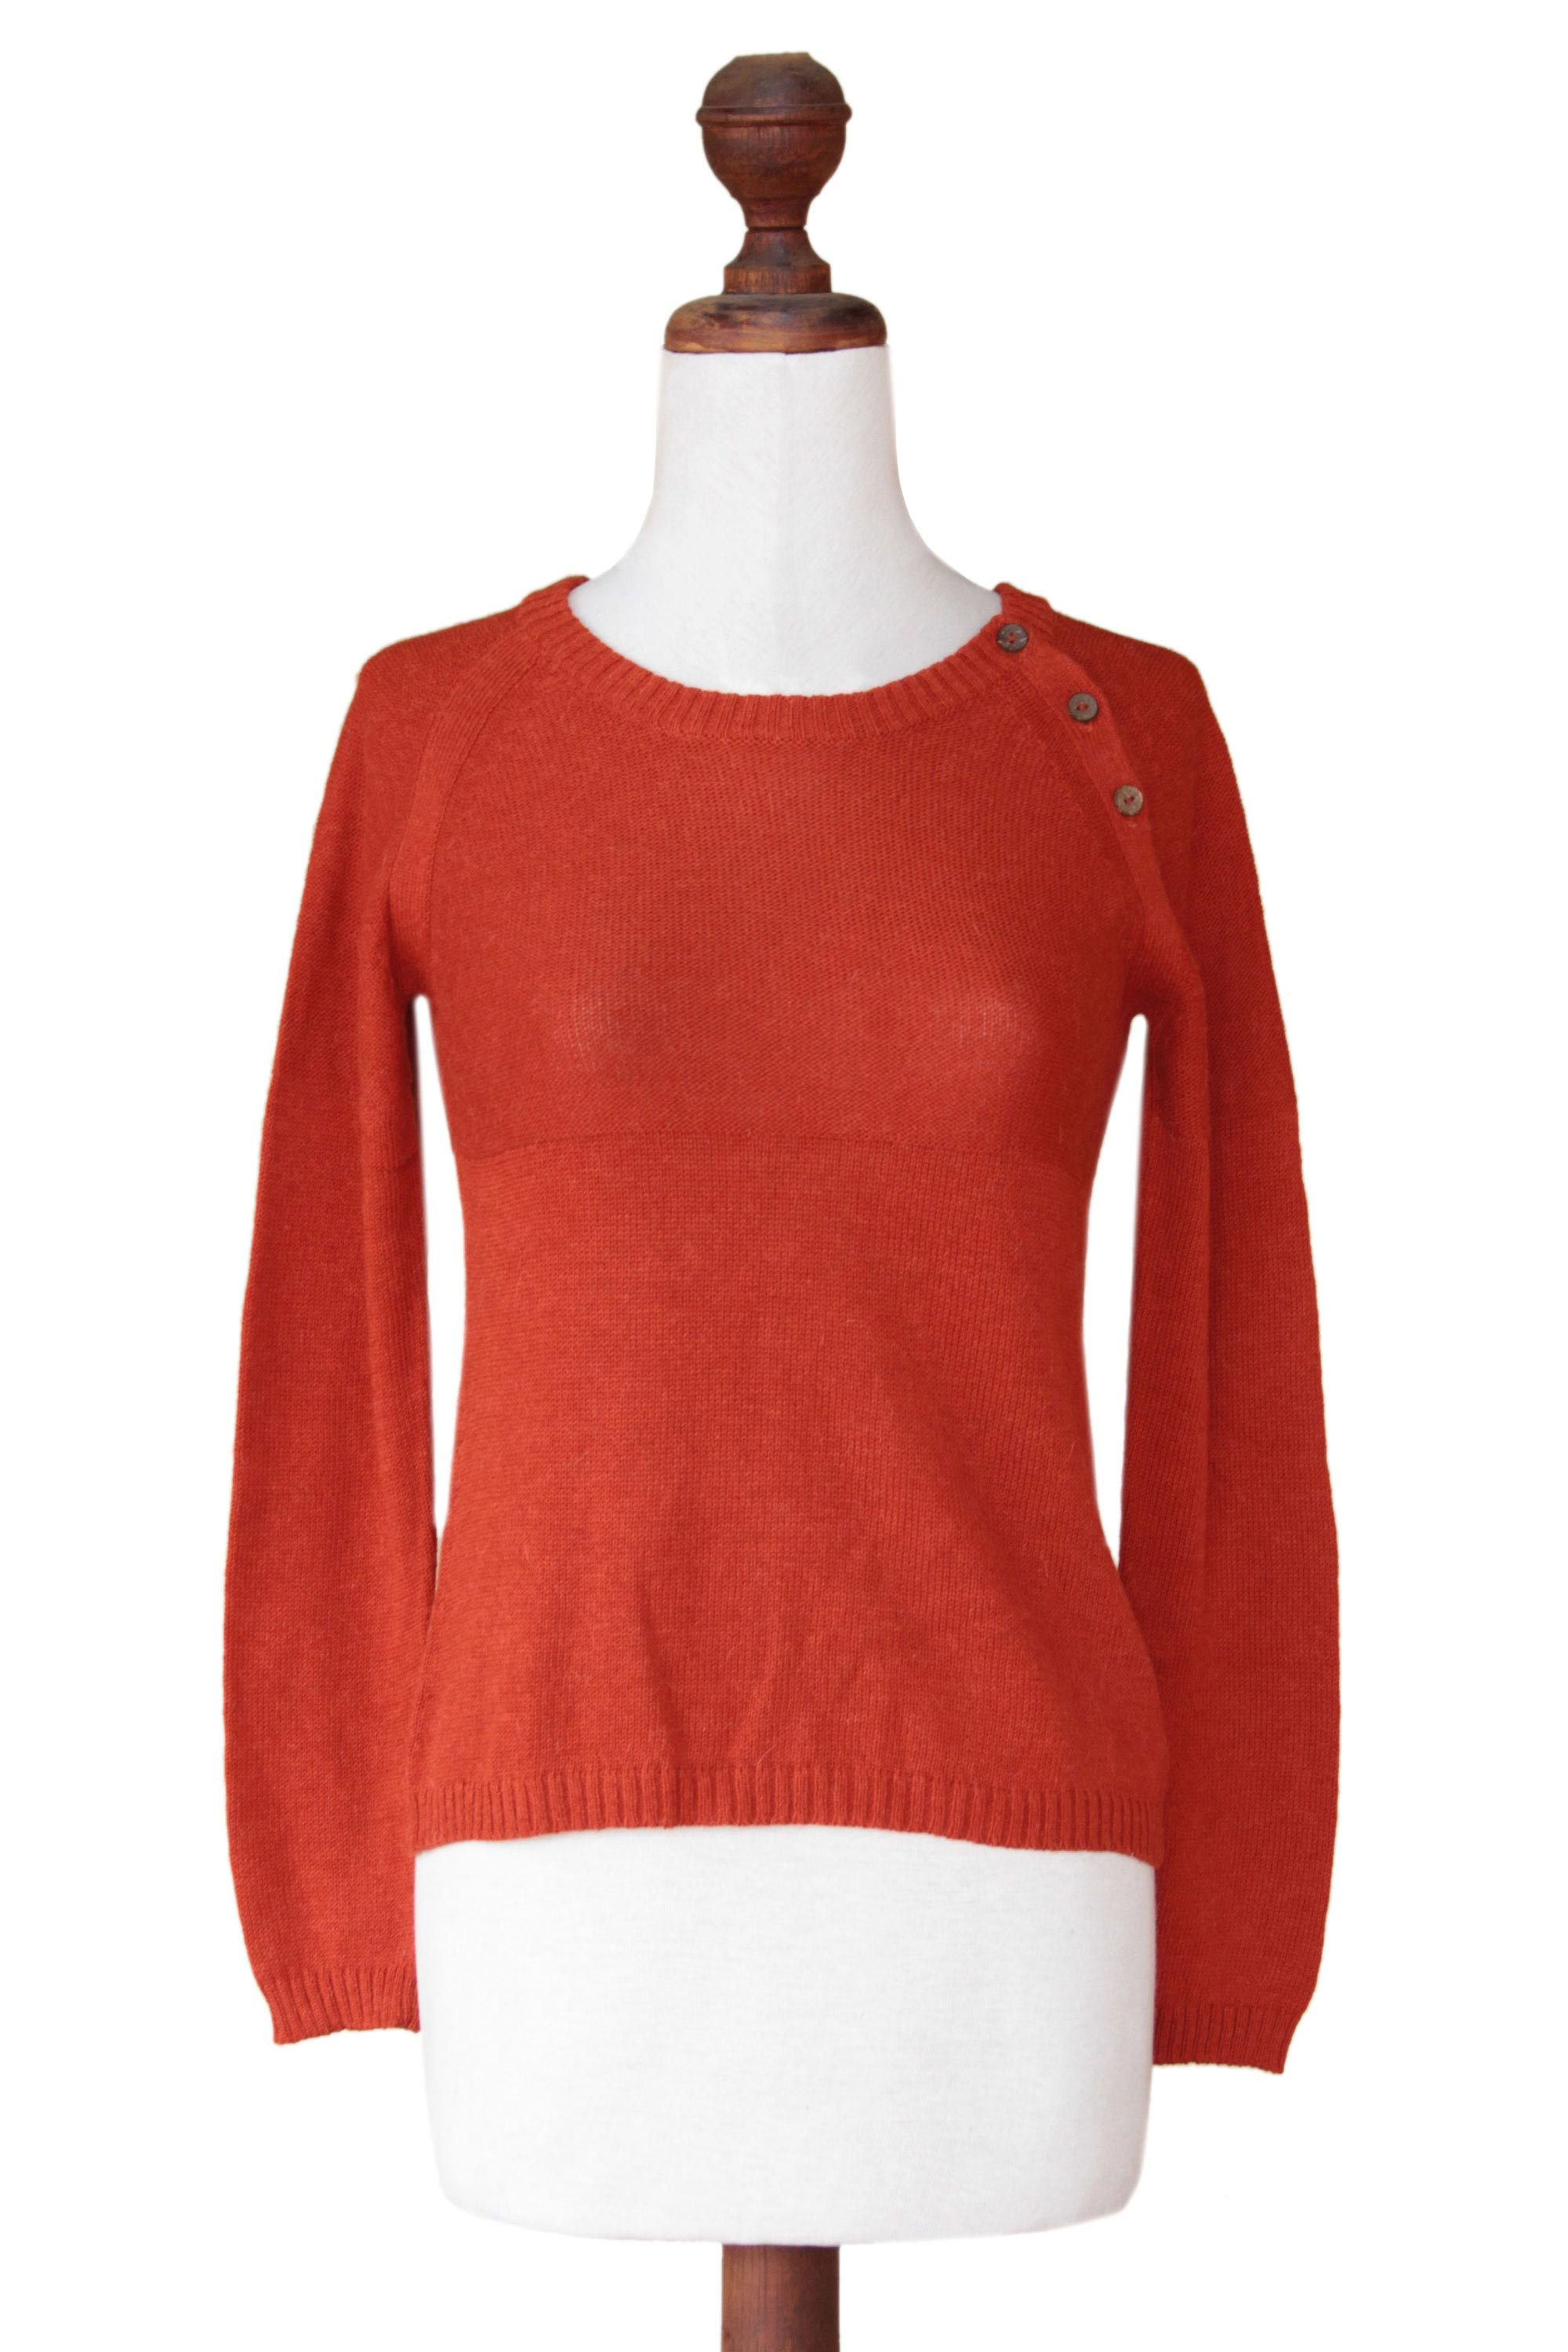 UNICEF Market | Handcrafted Alpaca Blend Sweater - Andean Orange